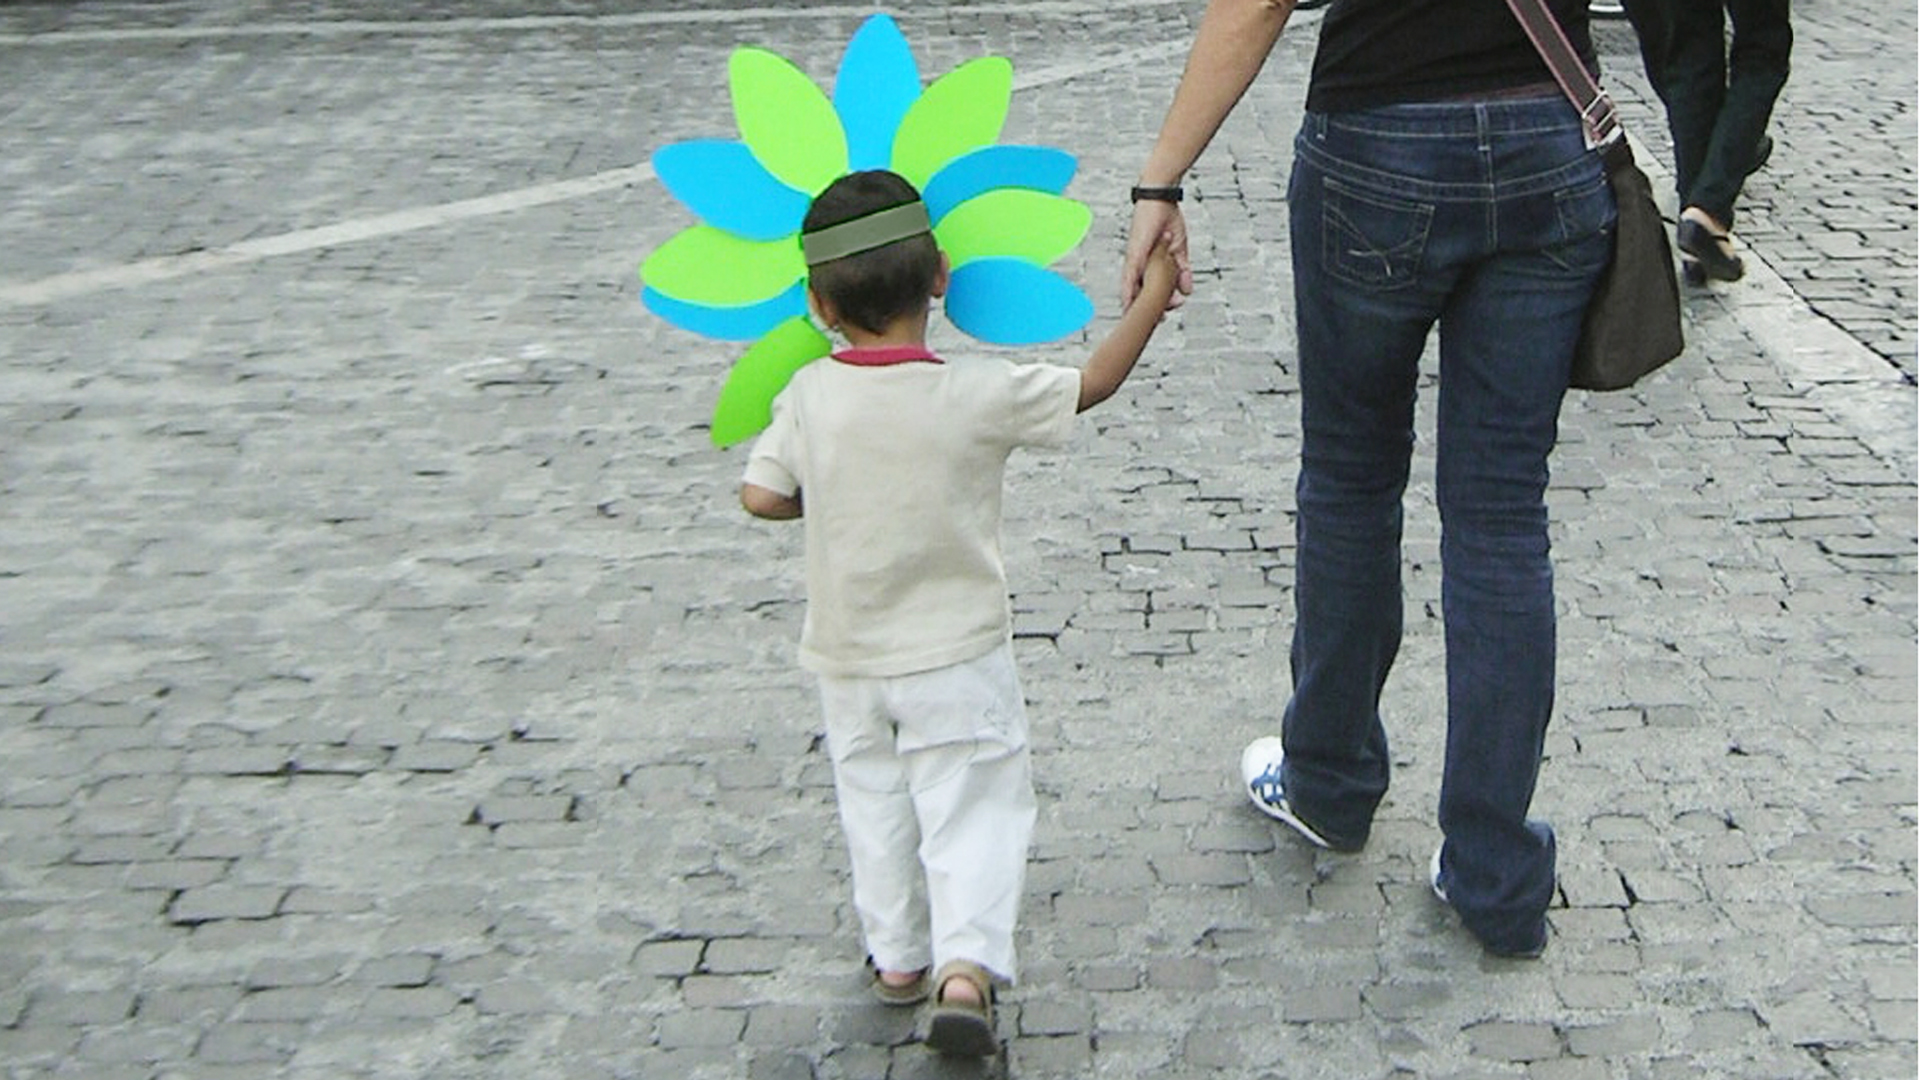 A paper flower-hat for children